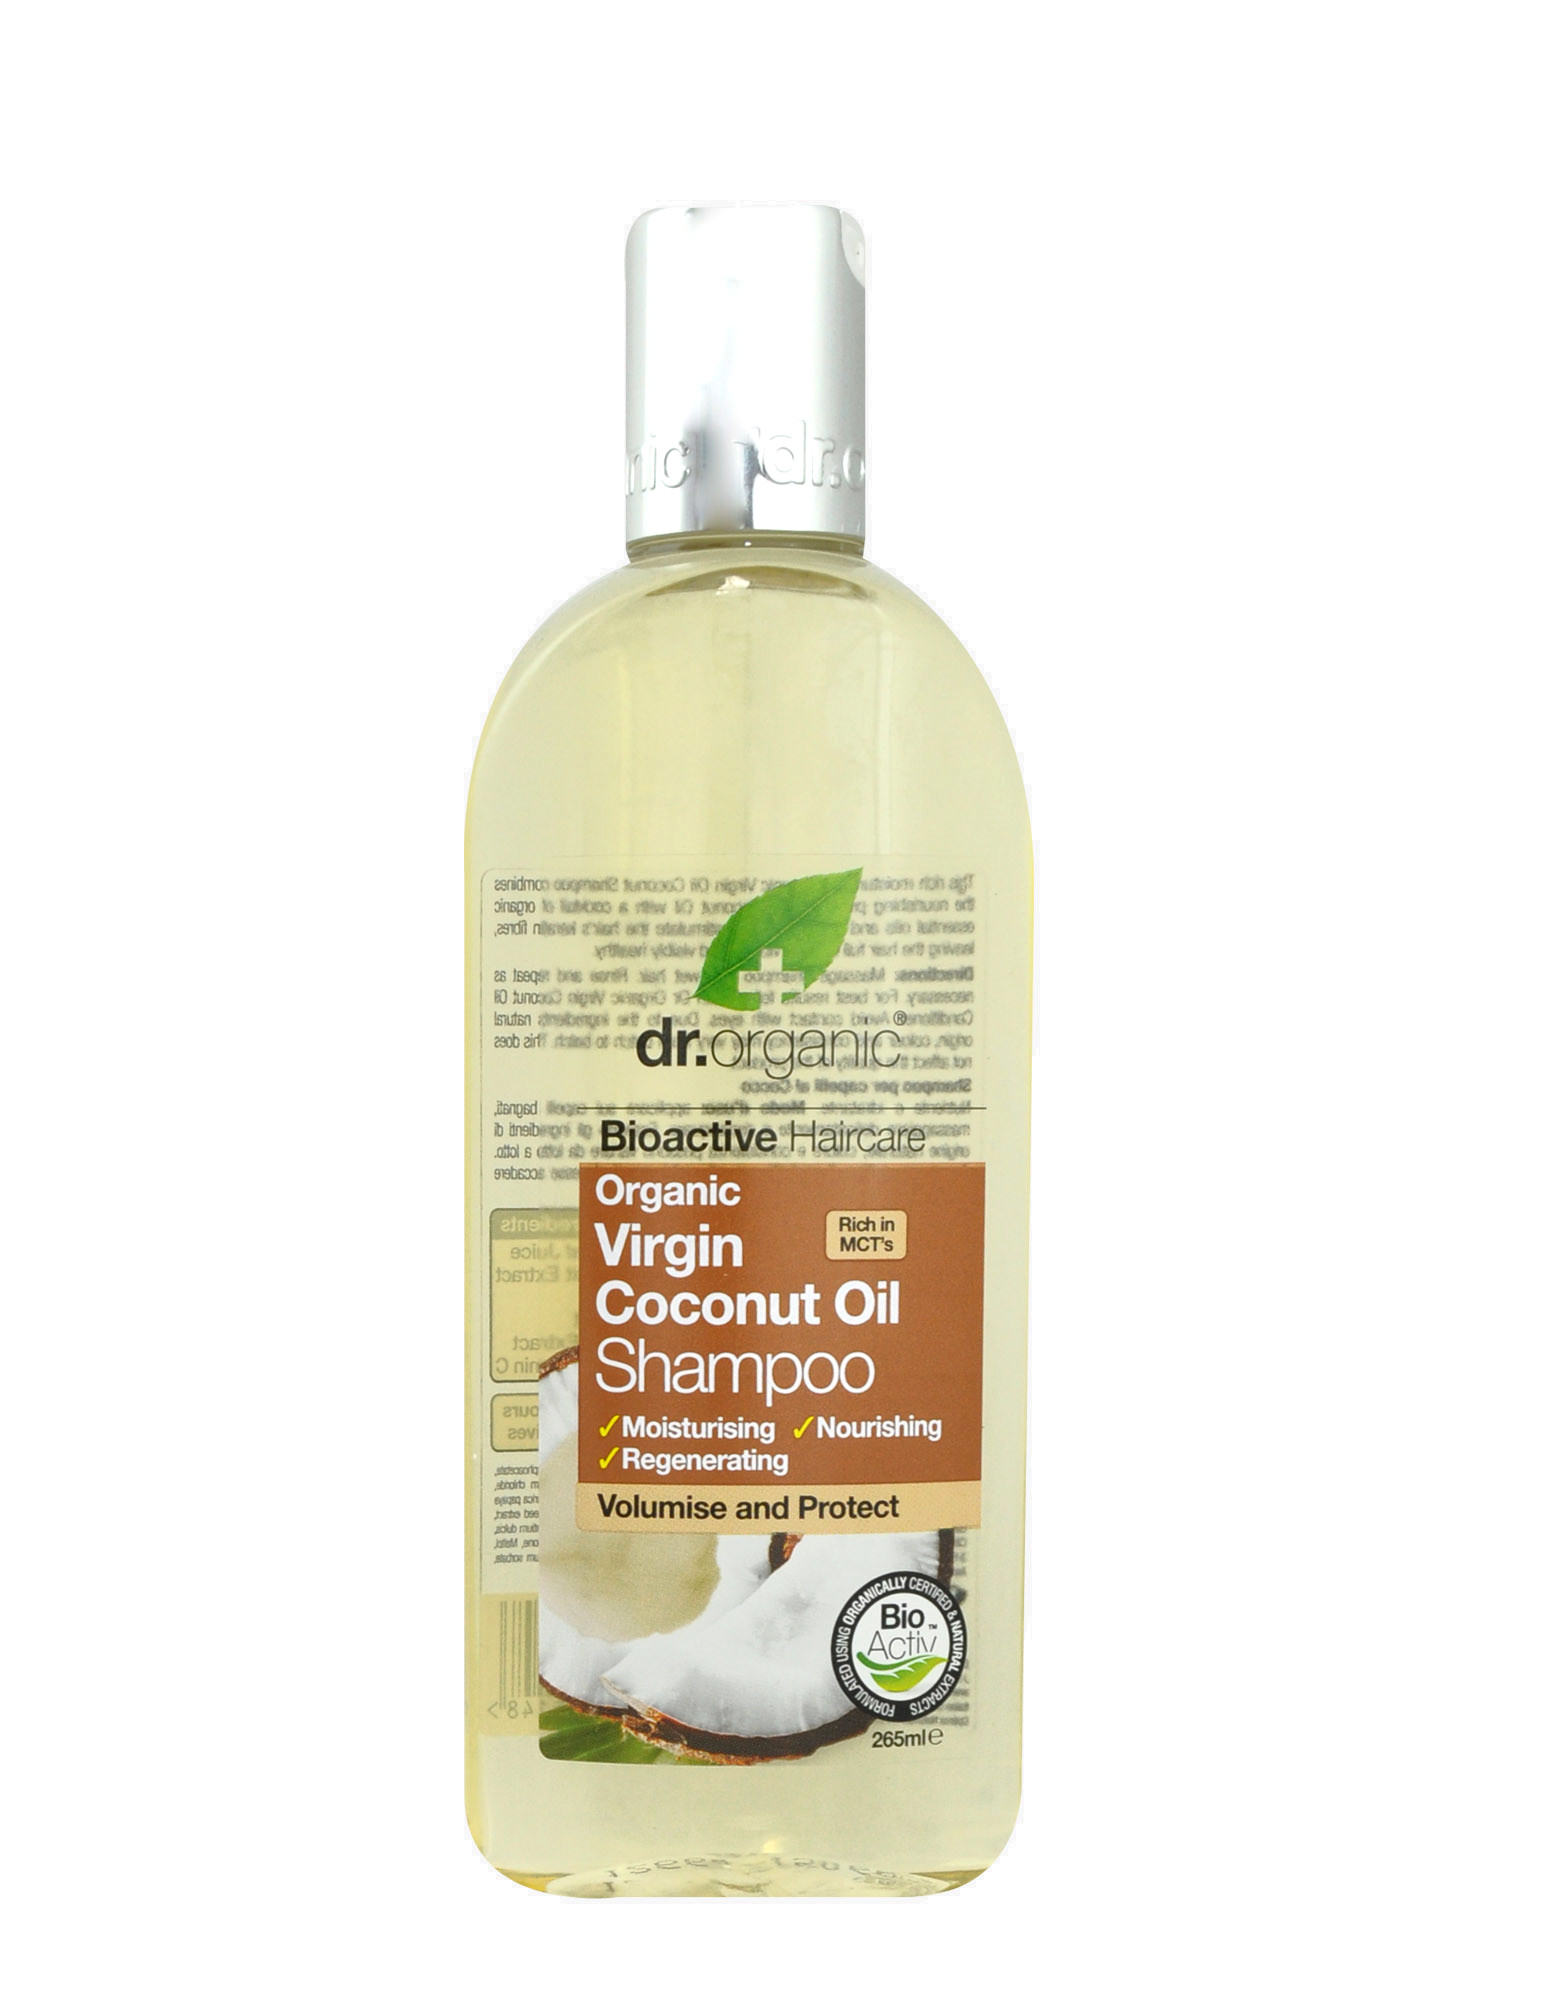 Inspektør Kom op Lima Organic Virgin Coconut Oil - Shampoo Dr. organic, 265ml - iafstore.com